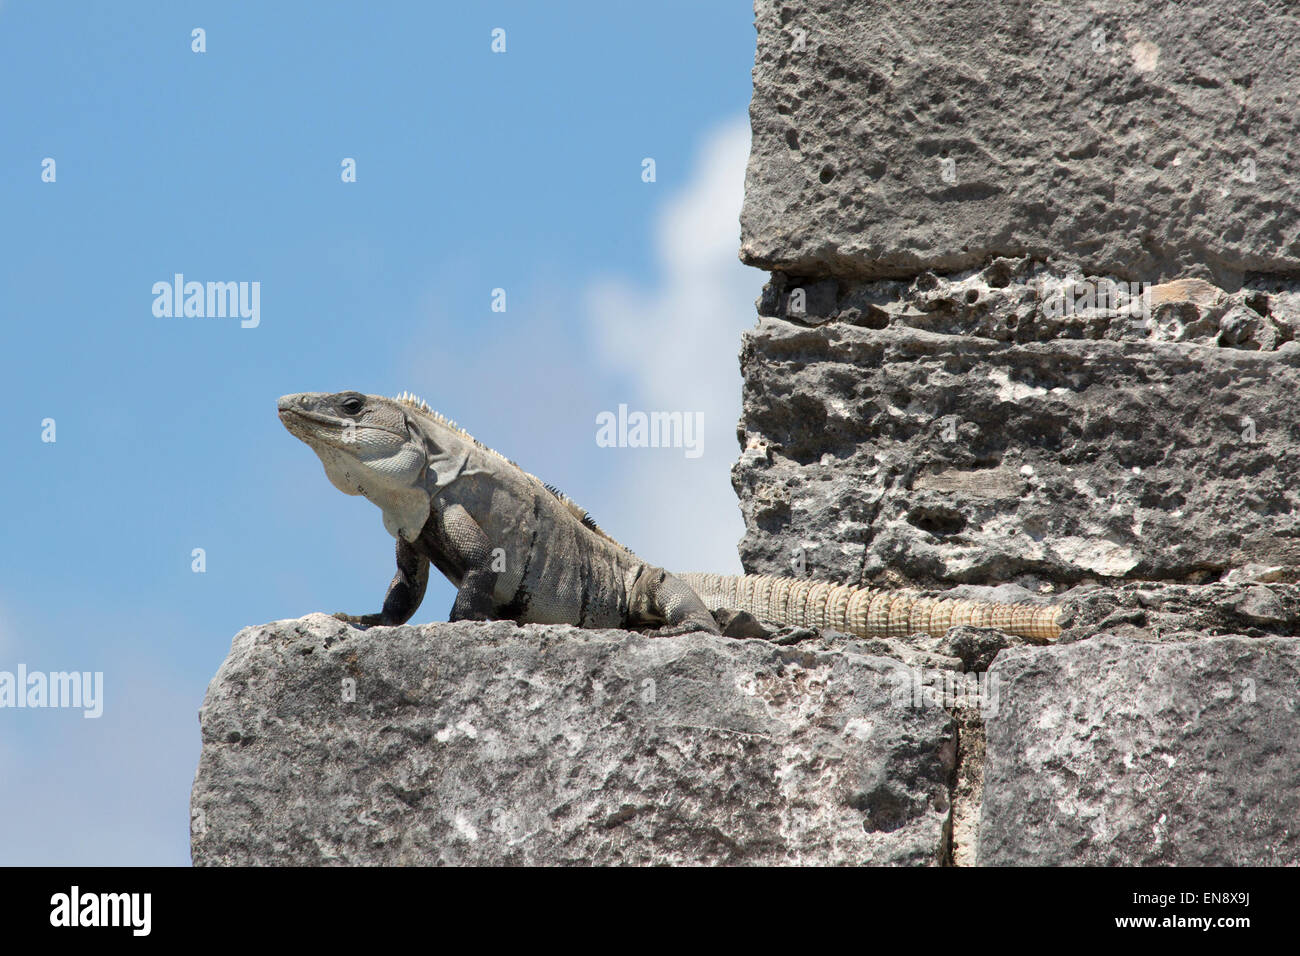 Black Spiny-tailed Iguana (Ctenosaura similis) basking on a stone ledge in Tulum, a Pre-Columbian Mayan archaeological site in the Yucatan peninsula Stock Photo